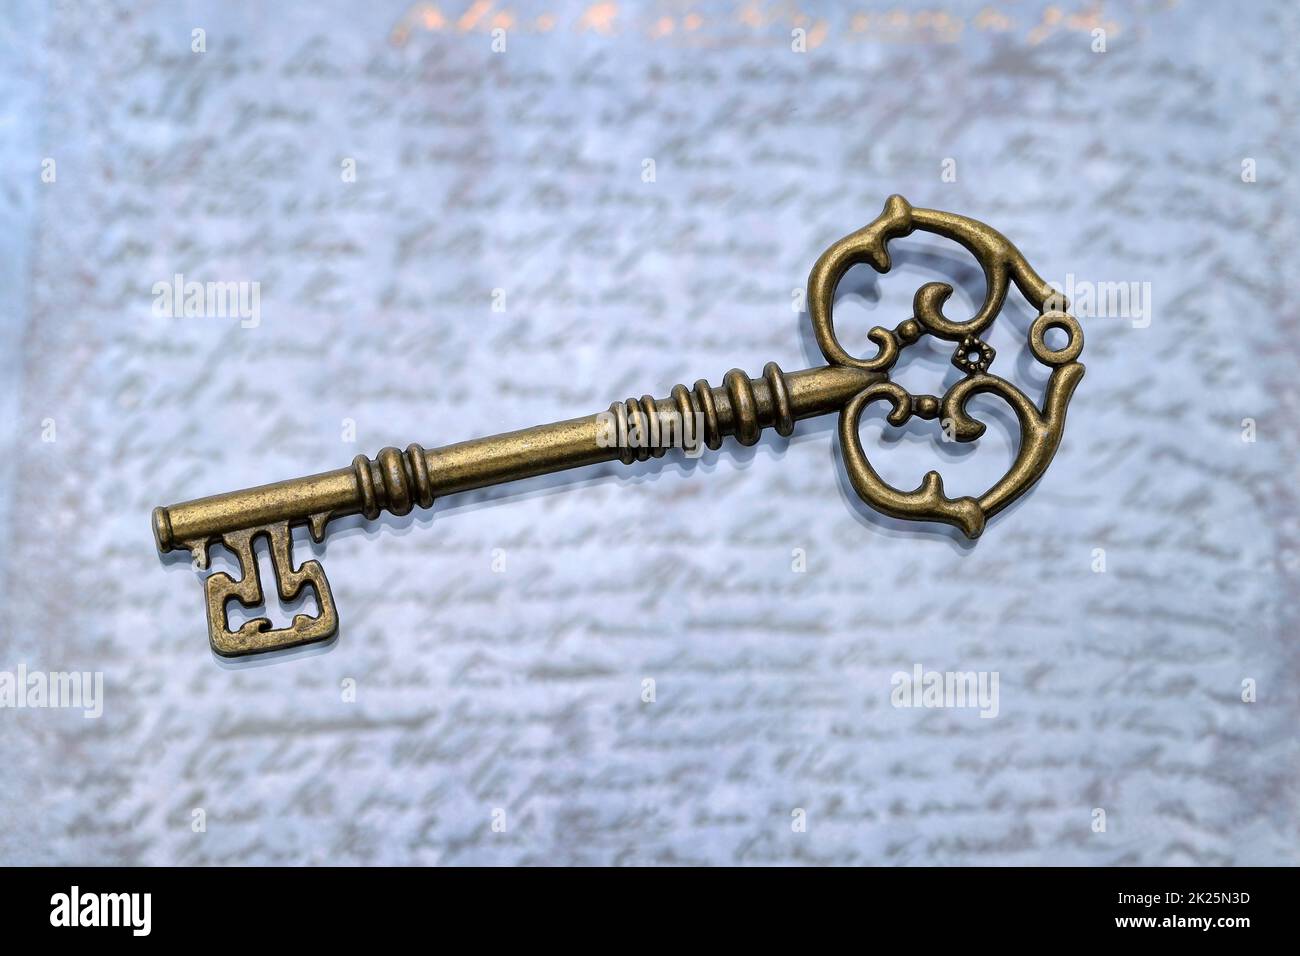 vintage key on a grungy blue leather background Stock Photo